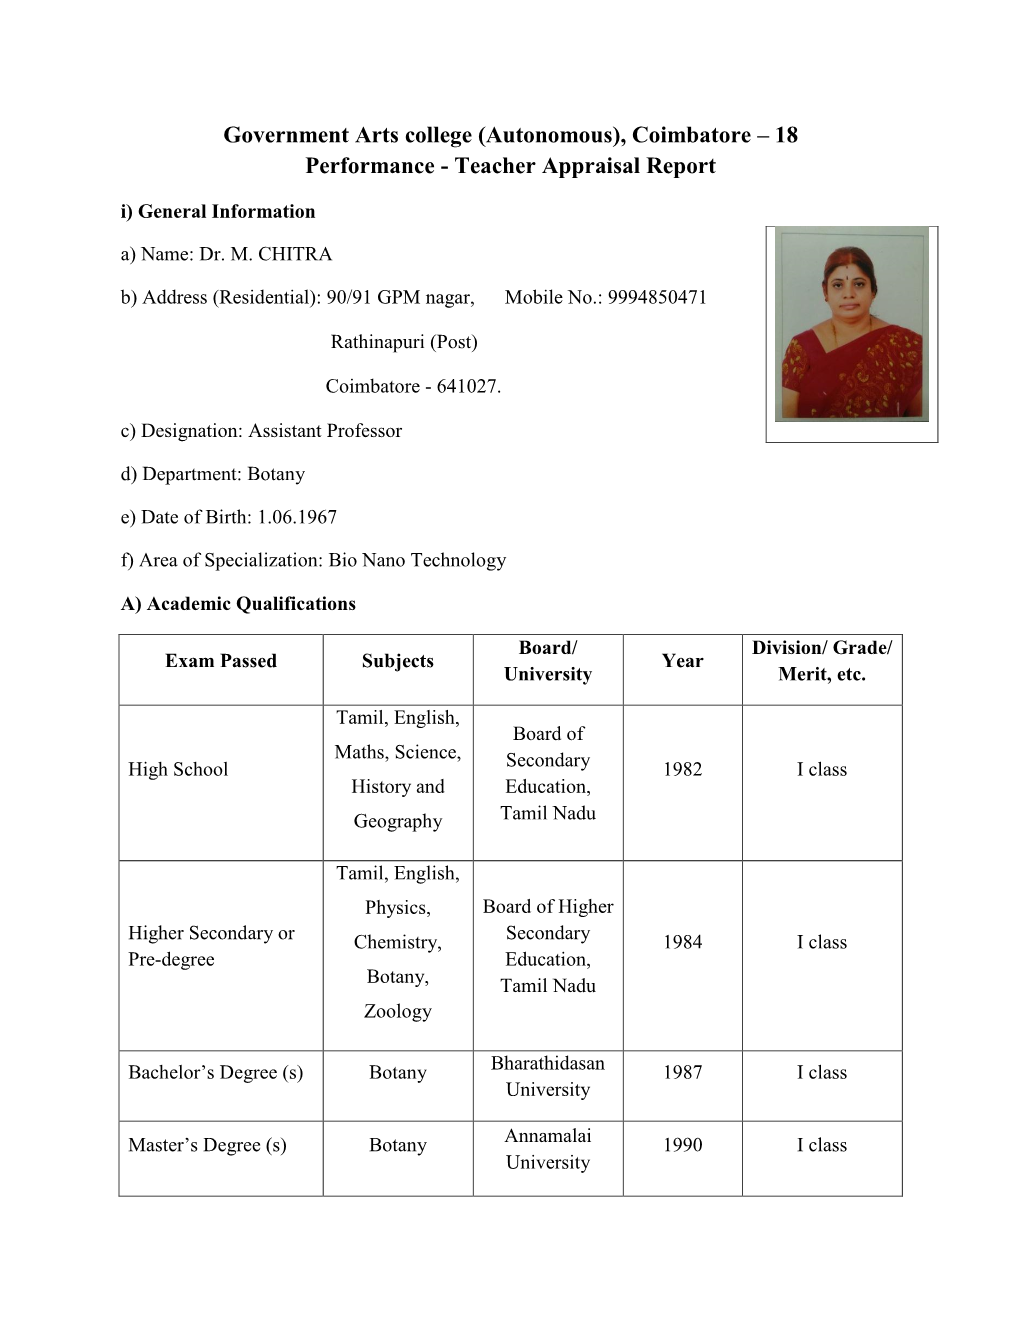 Government Arts College (Autonomous), Coimbatore – 18 Performance - Teacher Appraisal Report I) General Information A) Name: Dr